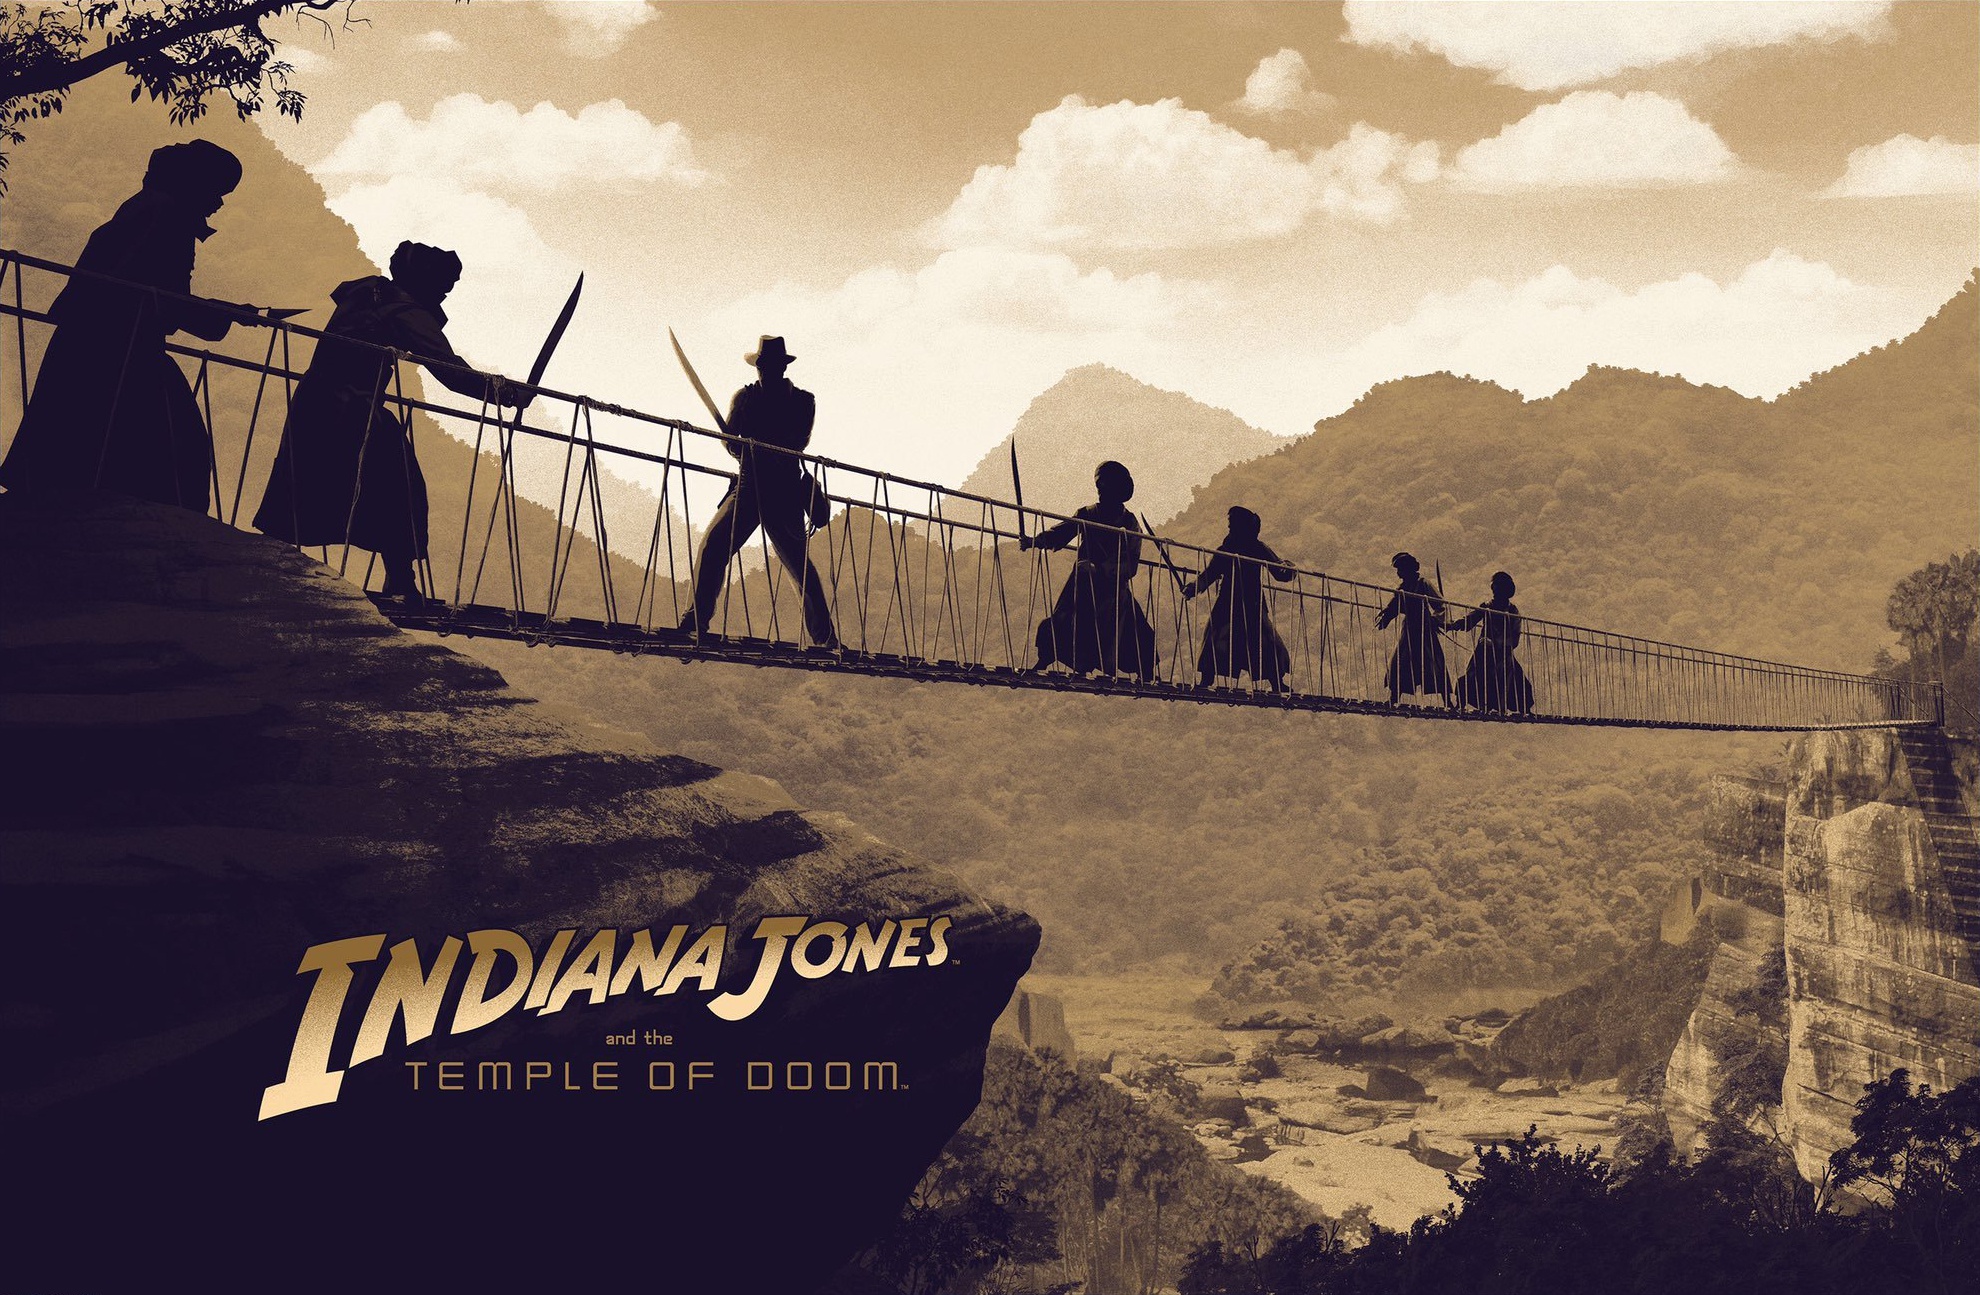 General 1980x1295 1984 (Year) movies Indiana Jones Indiana Jones and the Temple of Doom (Movies) artwork bridge Steven Spielberg George Lucas